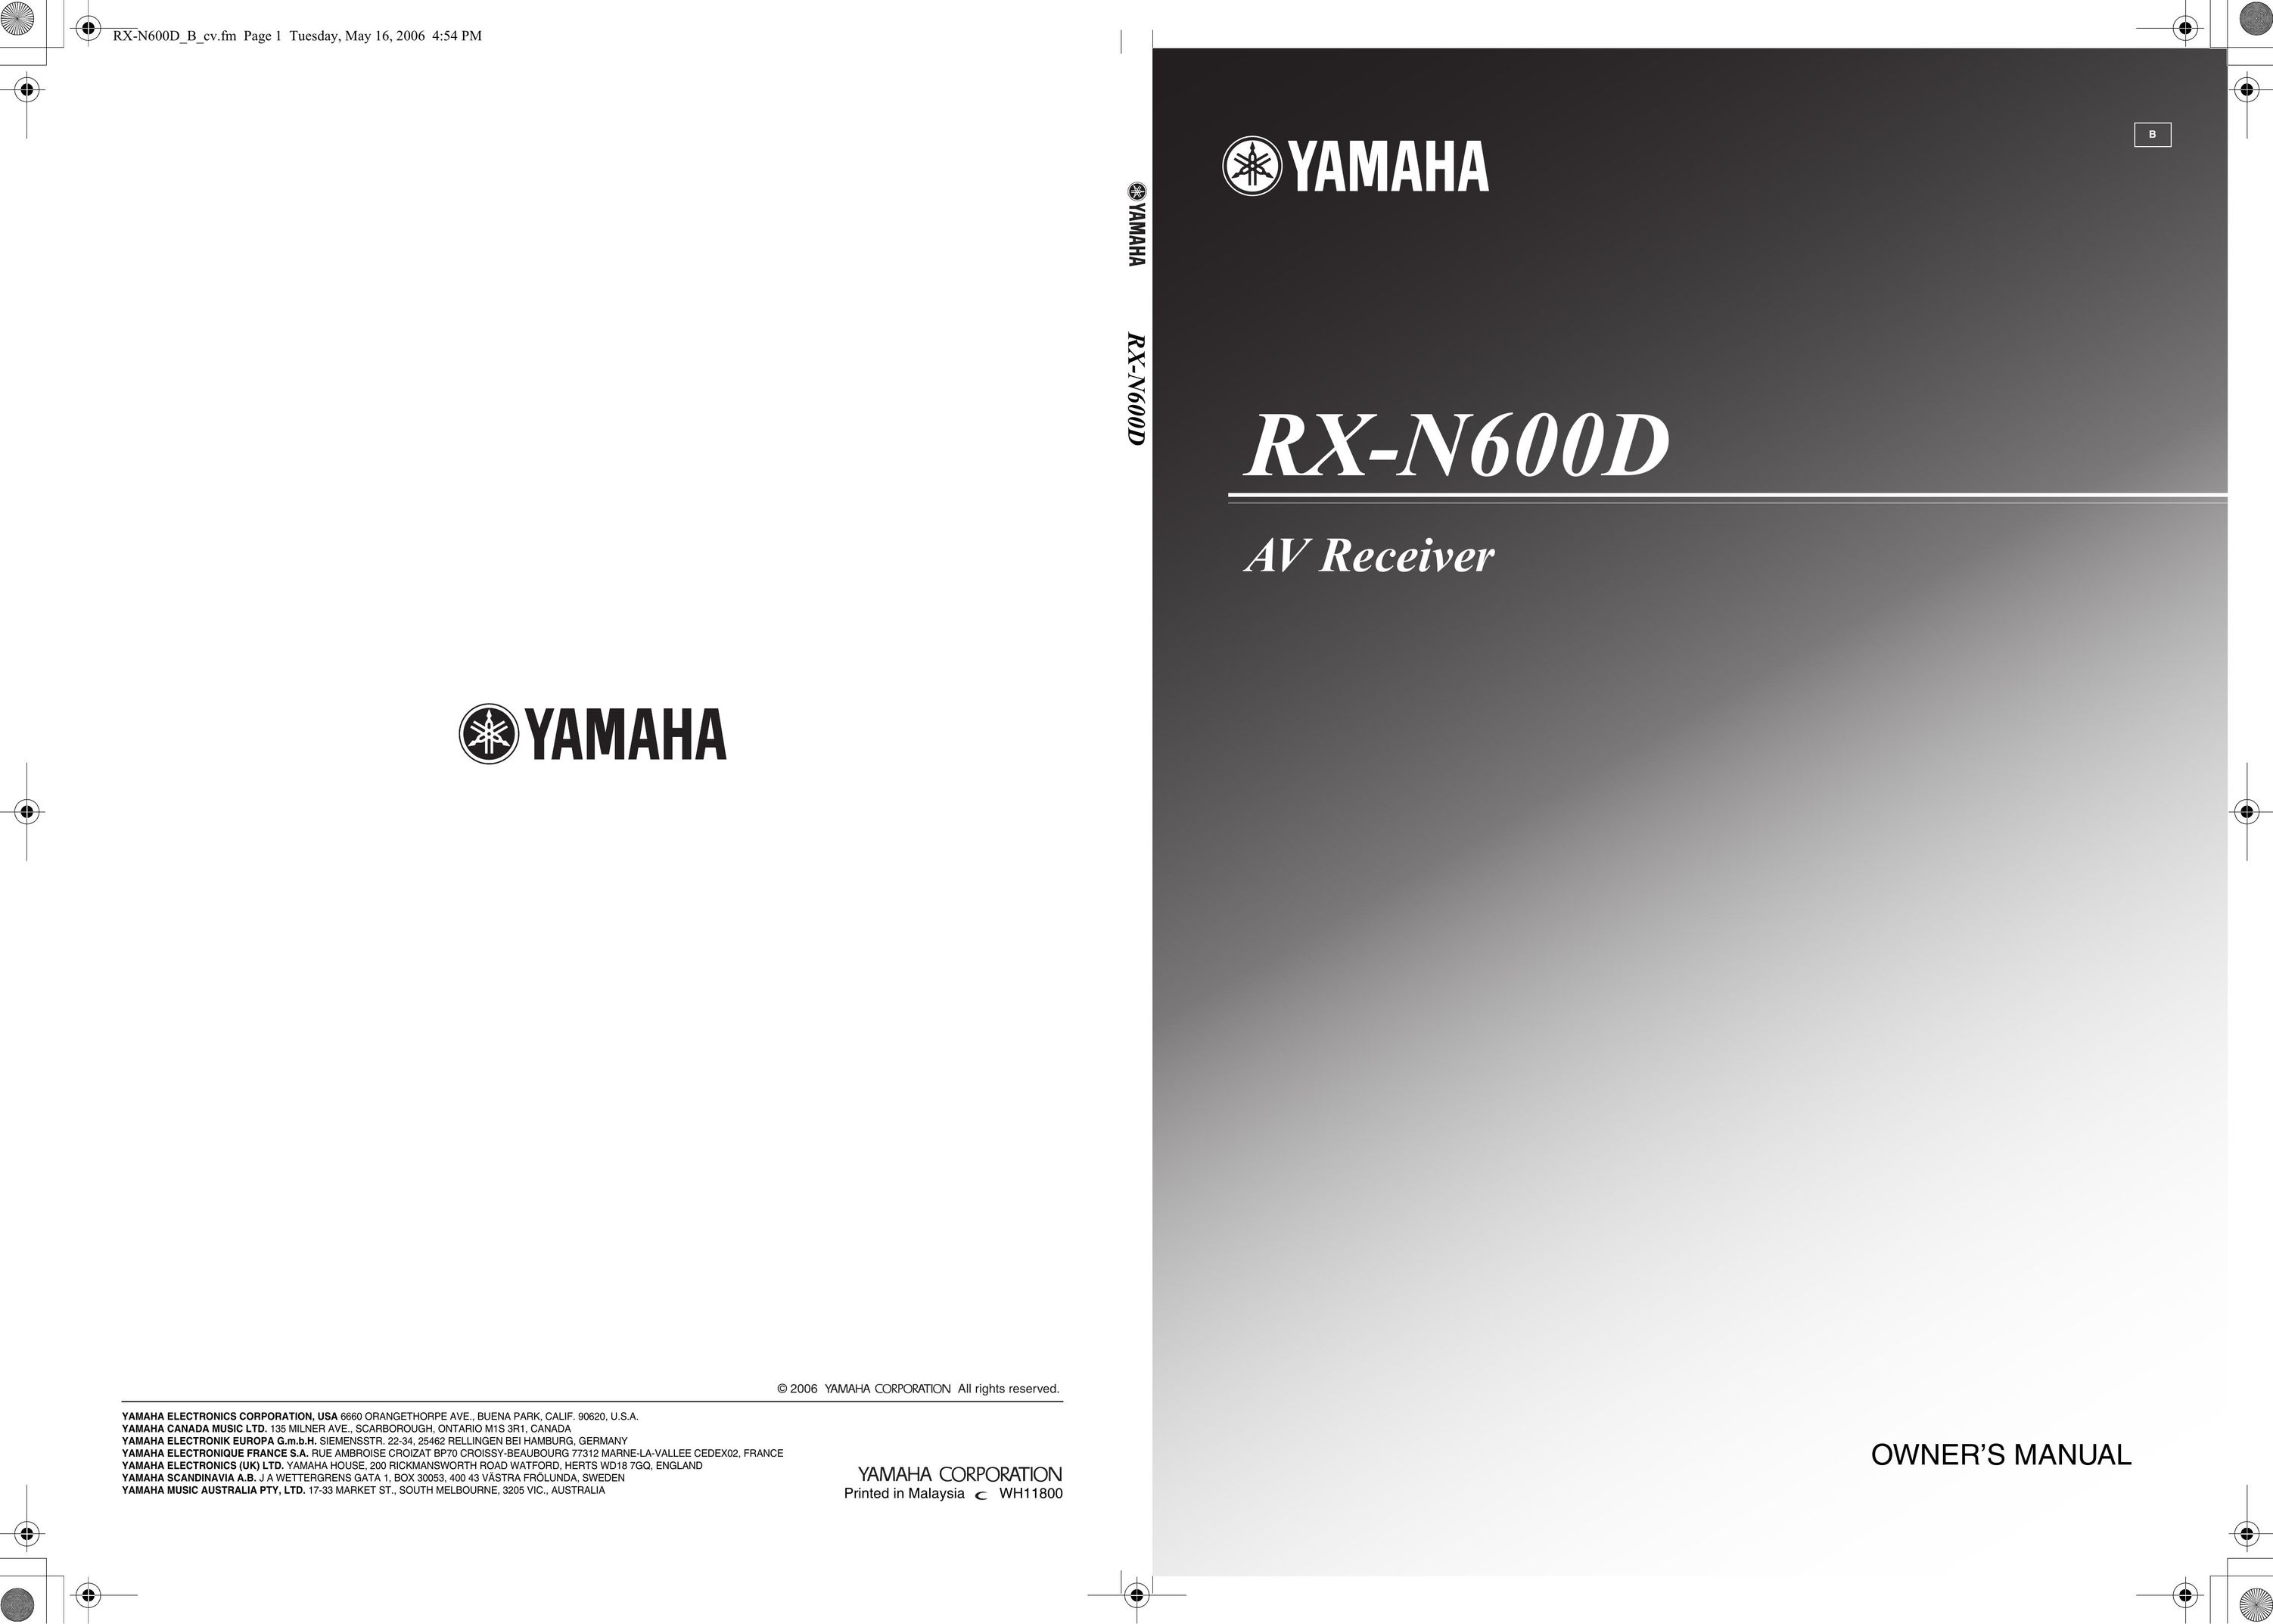 Yamaha RX-N600D Carrying Case User Manual